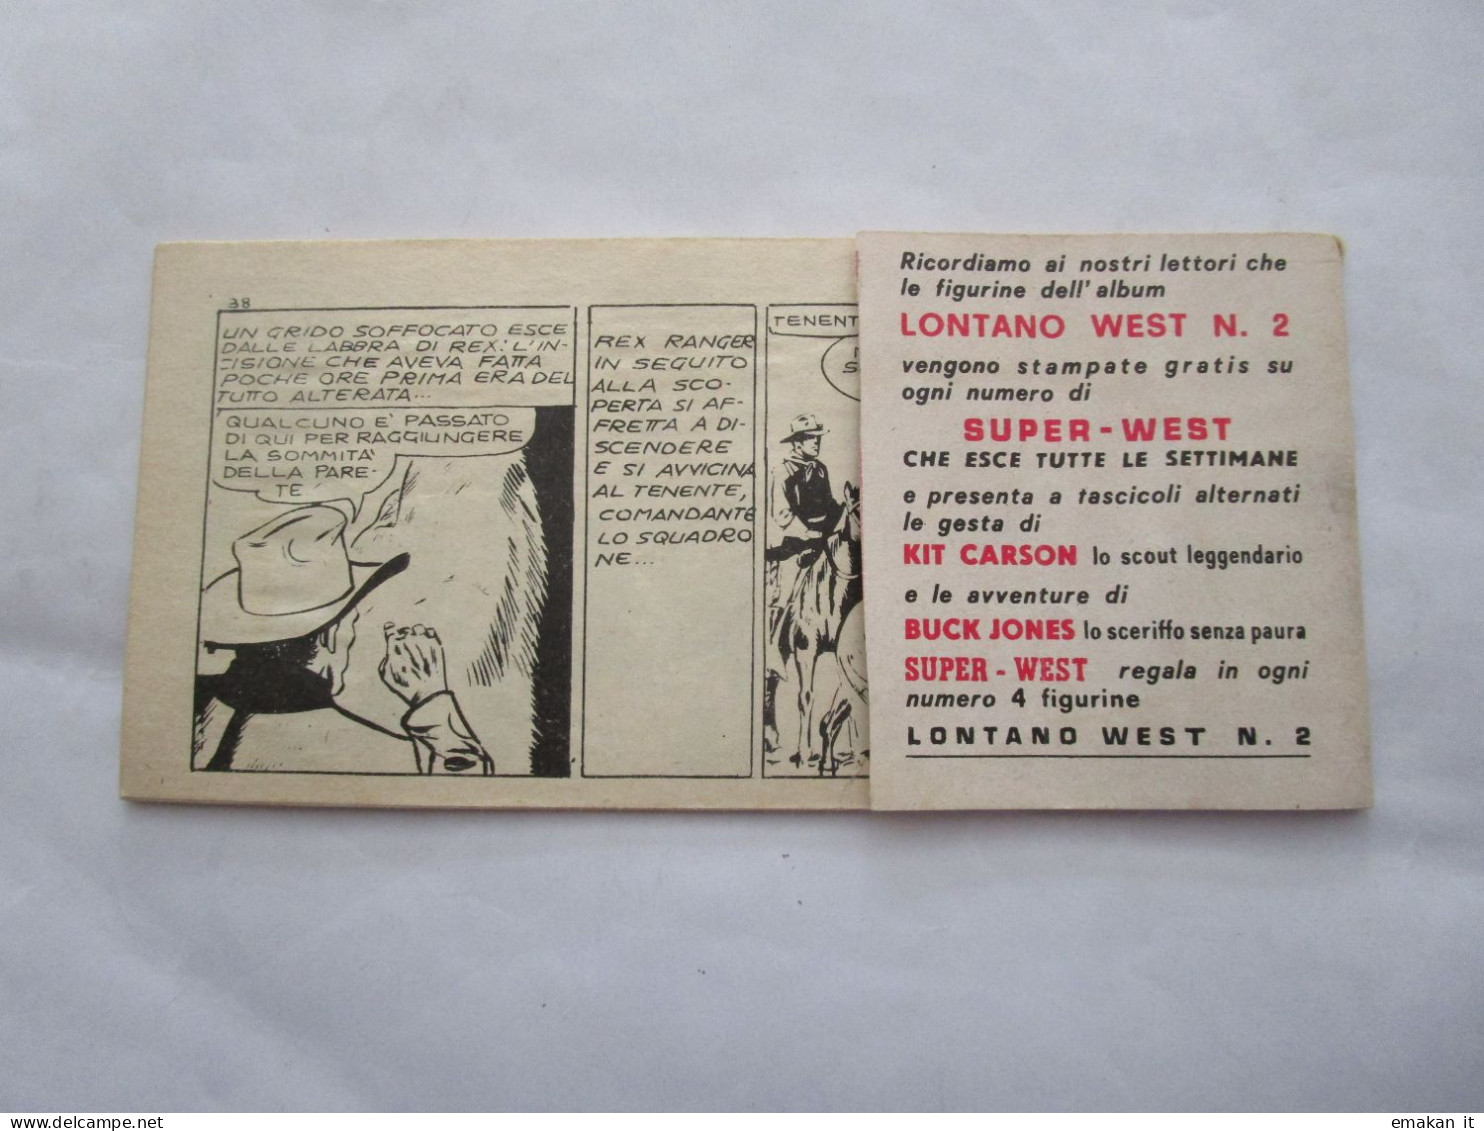 # STRISCIA IL GRANDE BLEK SERIE XXIV N 3 / 1964 - First Editions